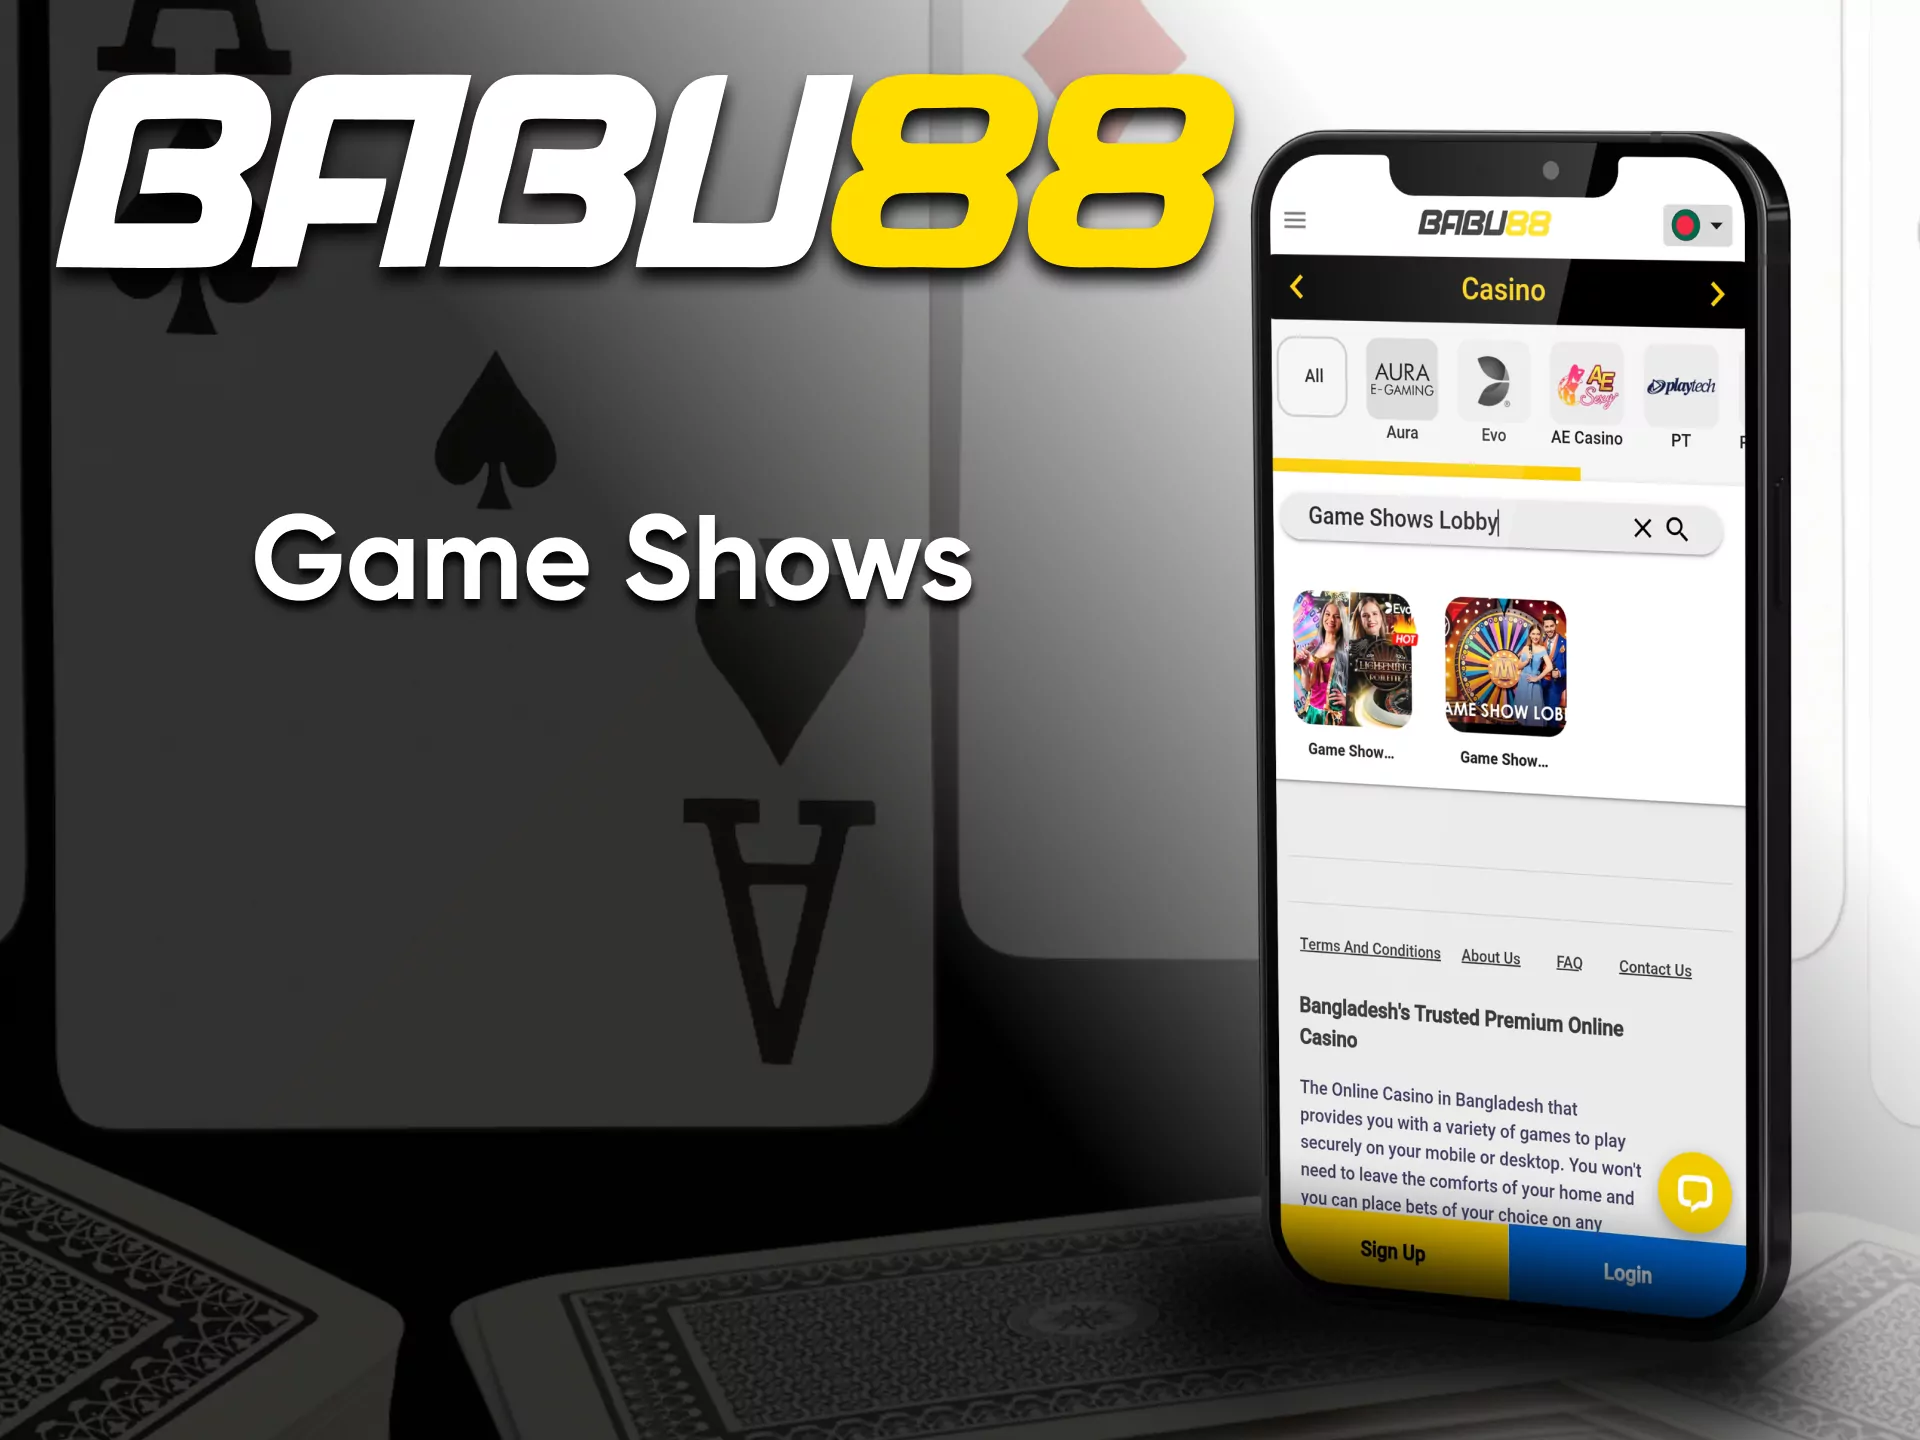 Play Game Shows through the Babu88 app.